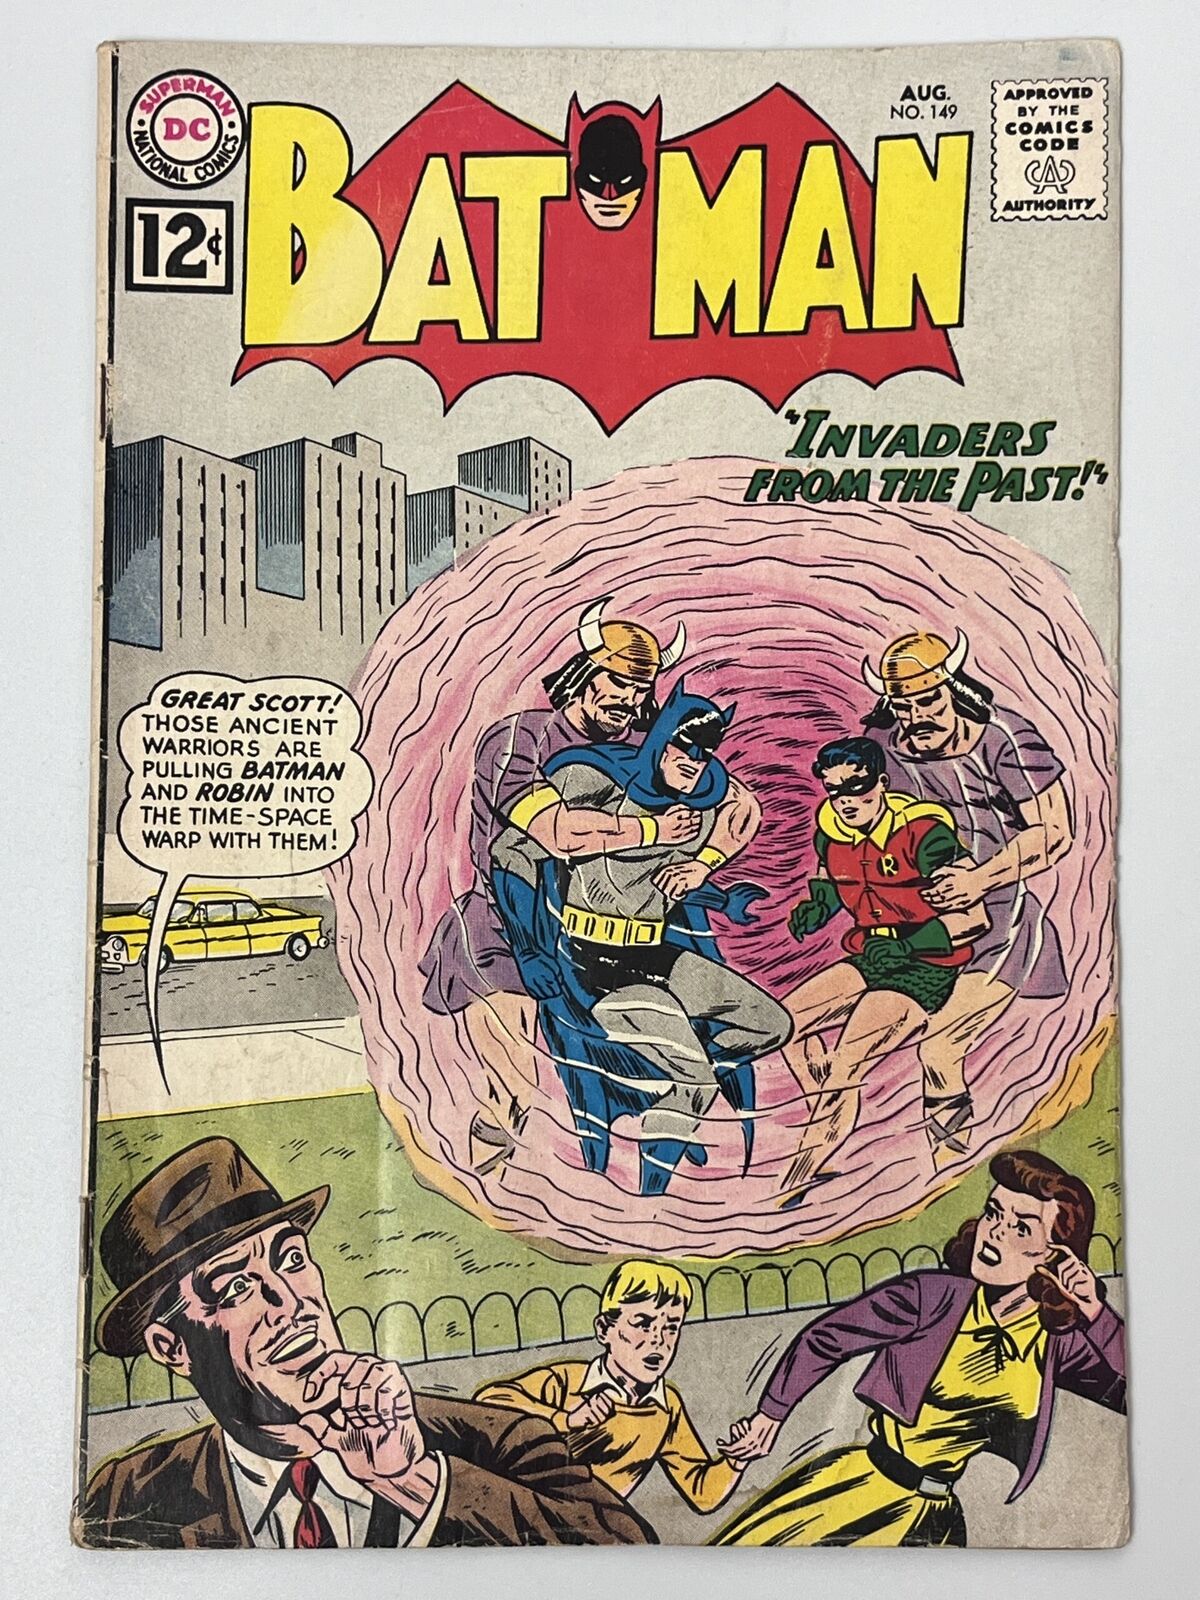 Batman #149 (1962) in 4.0 Very Good